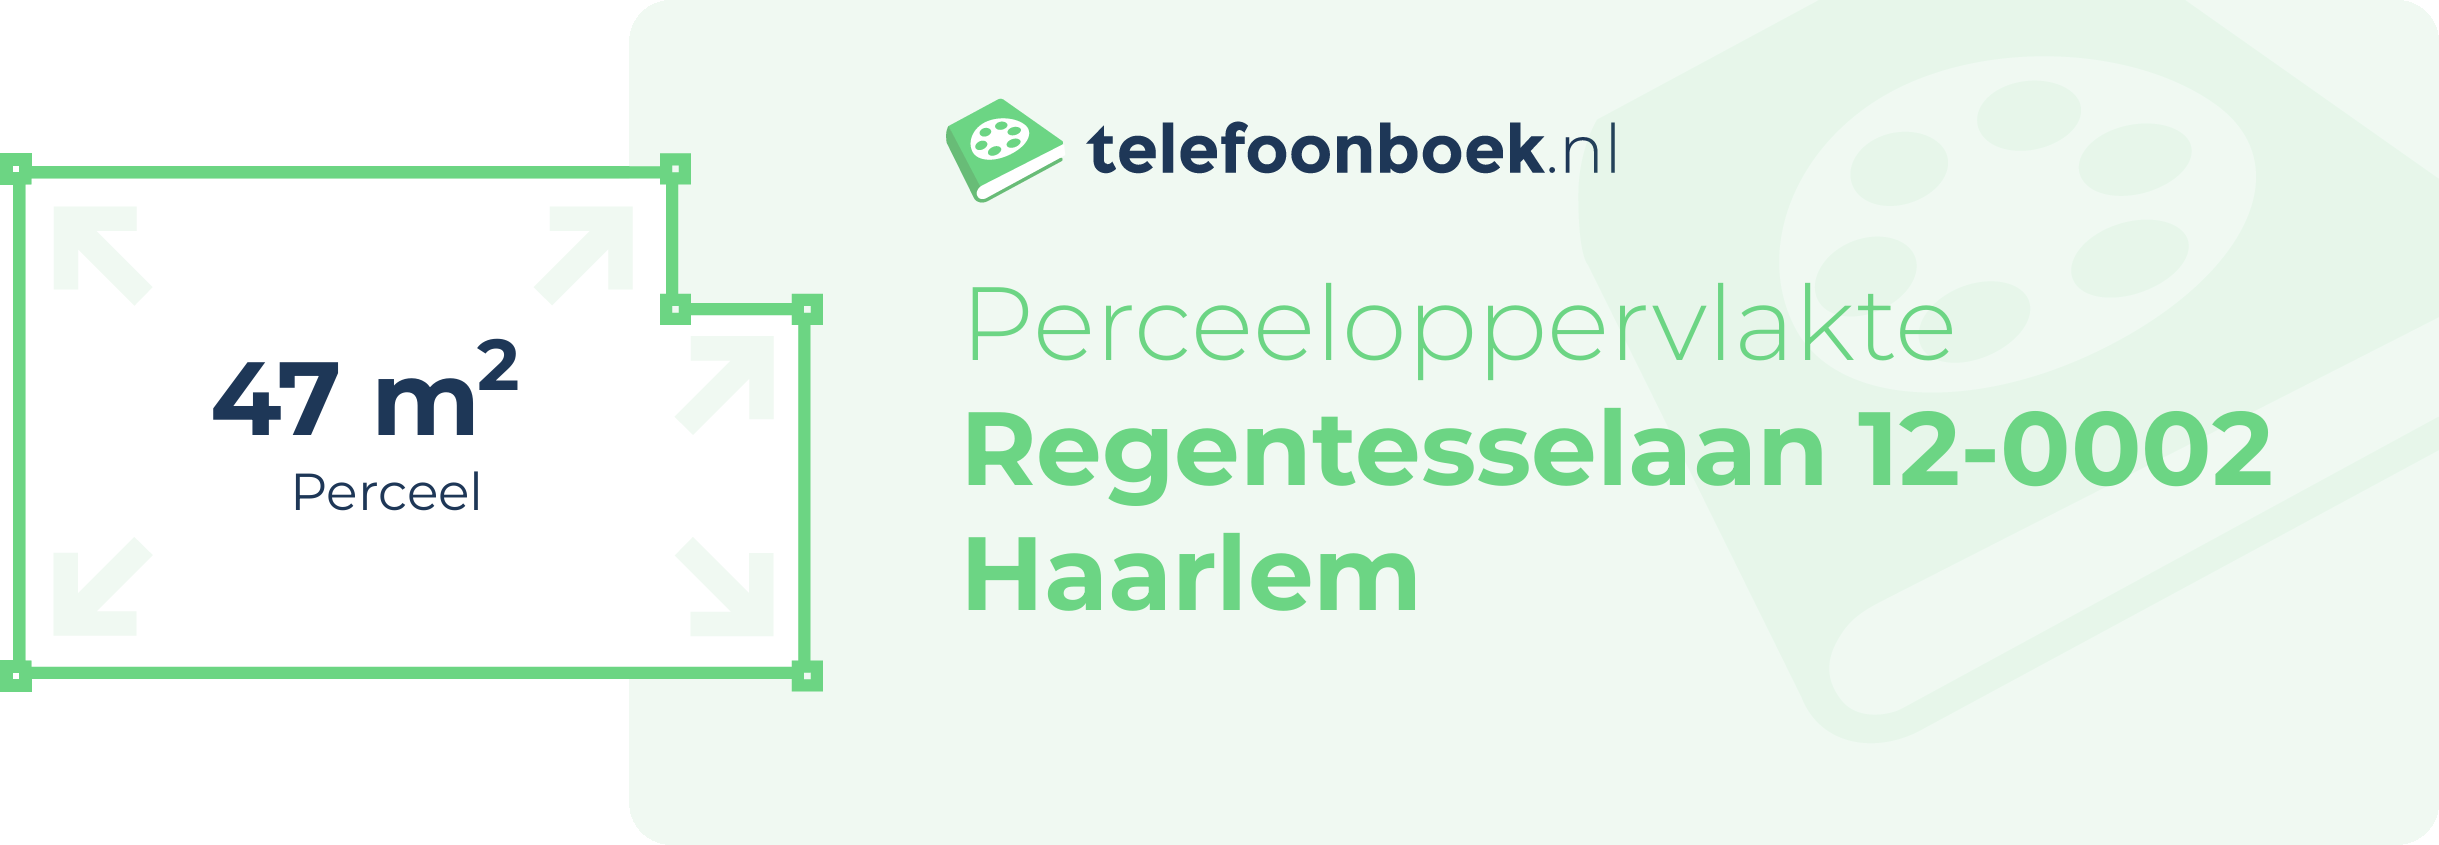 Perceeloppervlakte Regentesselaan 12-0002 Haarlem